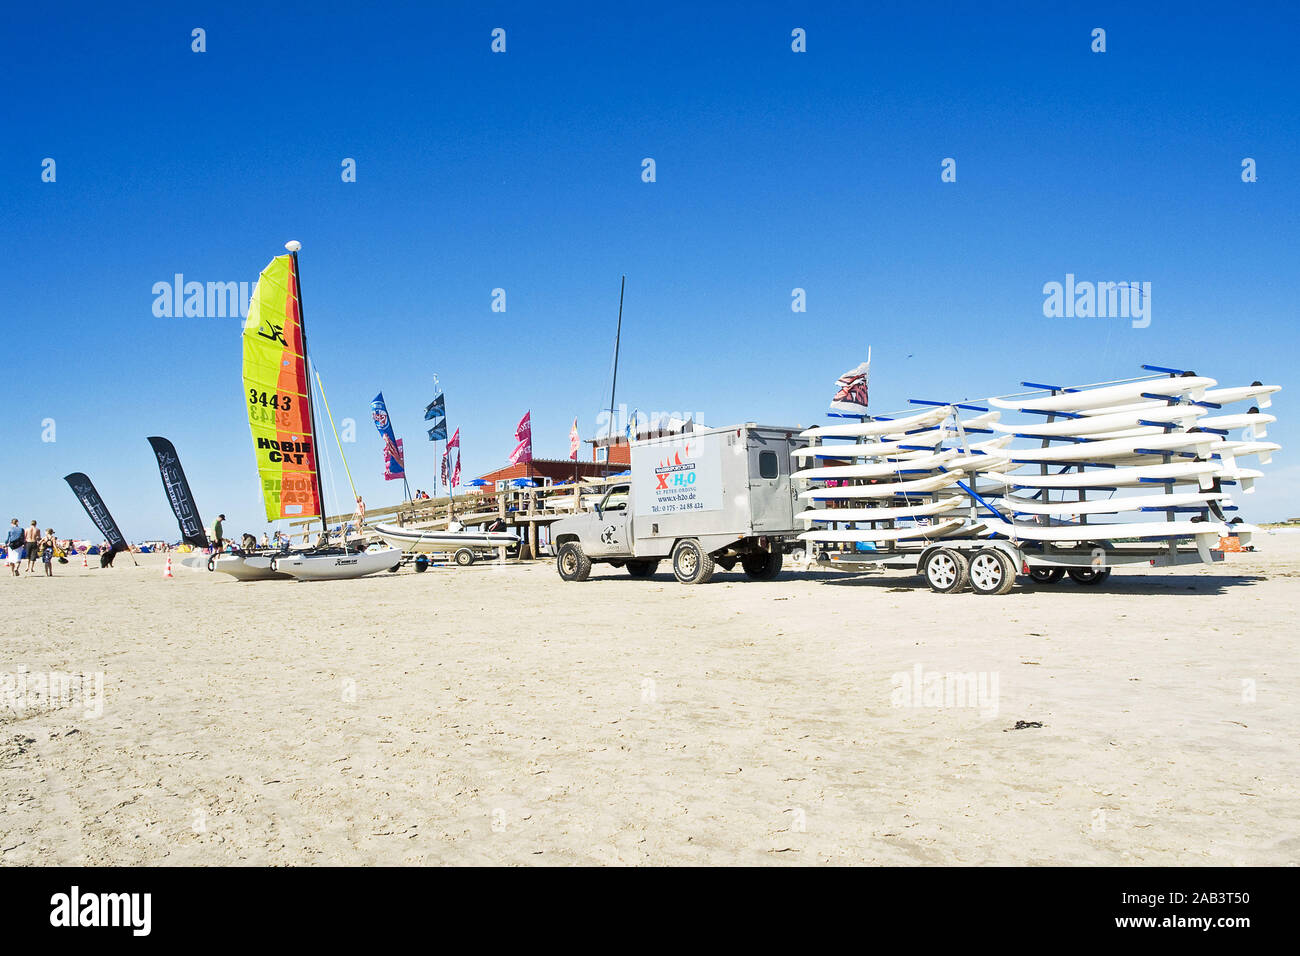 Surfschule am Strand von San Peter-Ording Foto Stock